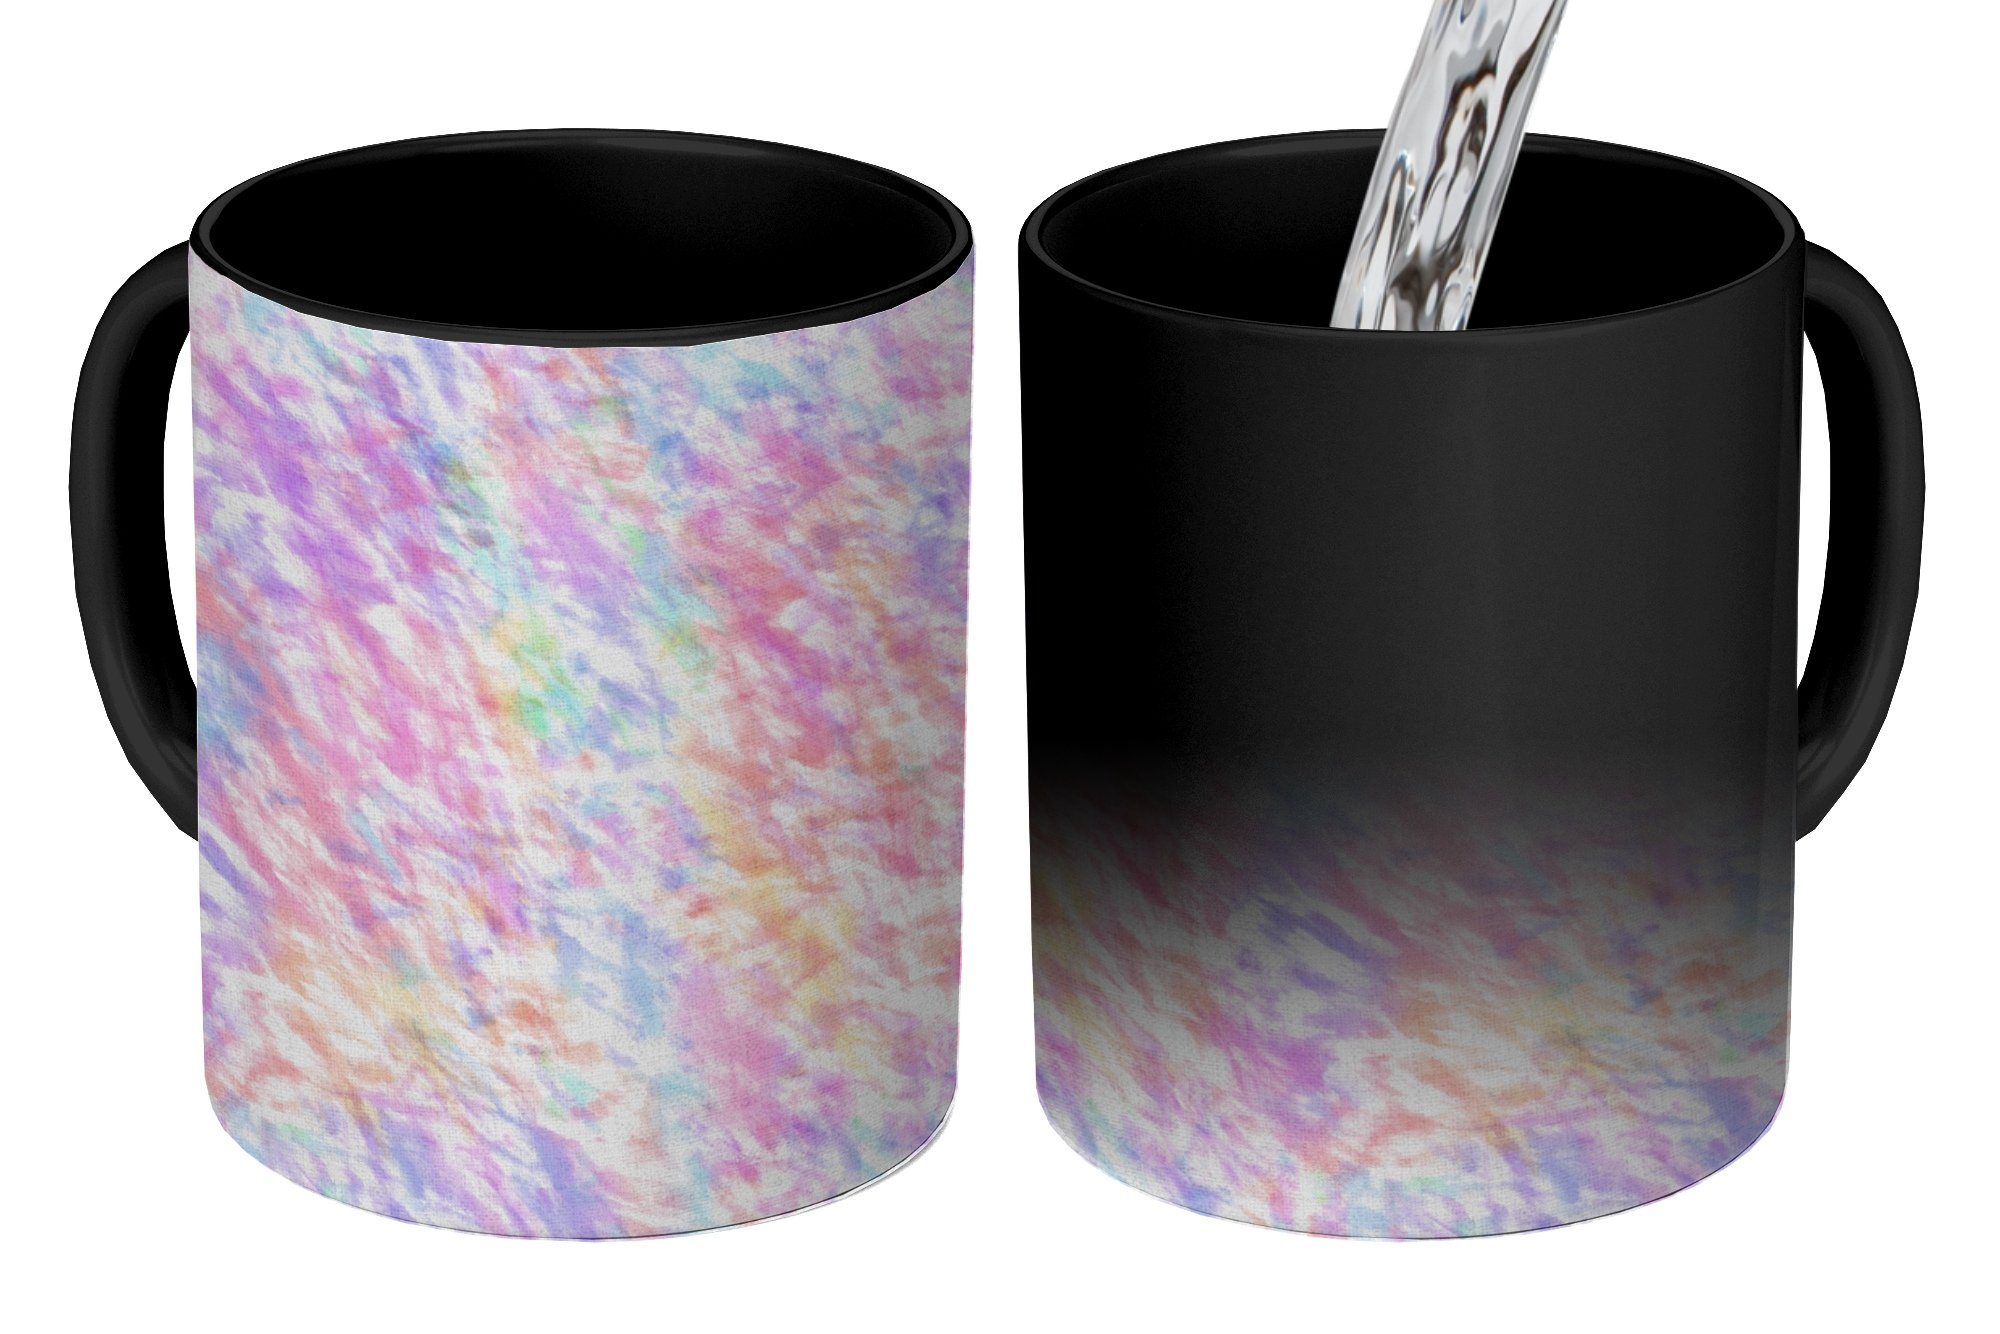 Zaubertasse, Geschenk Kaffeetassen, Teetasse, Farbwechsel, Muster - Krawattenfärbung, MuchoWow Tasse - Regenbogen Farbe Keramik, -